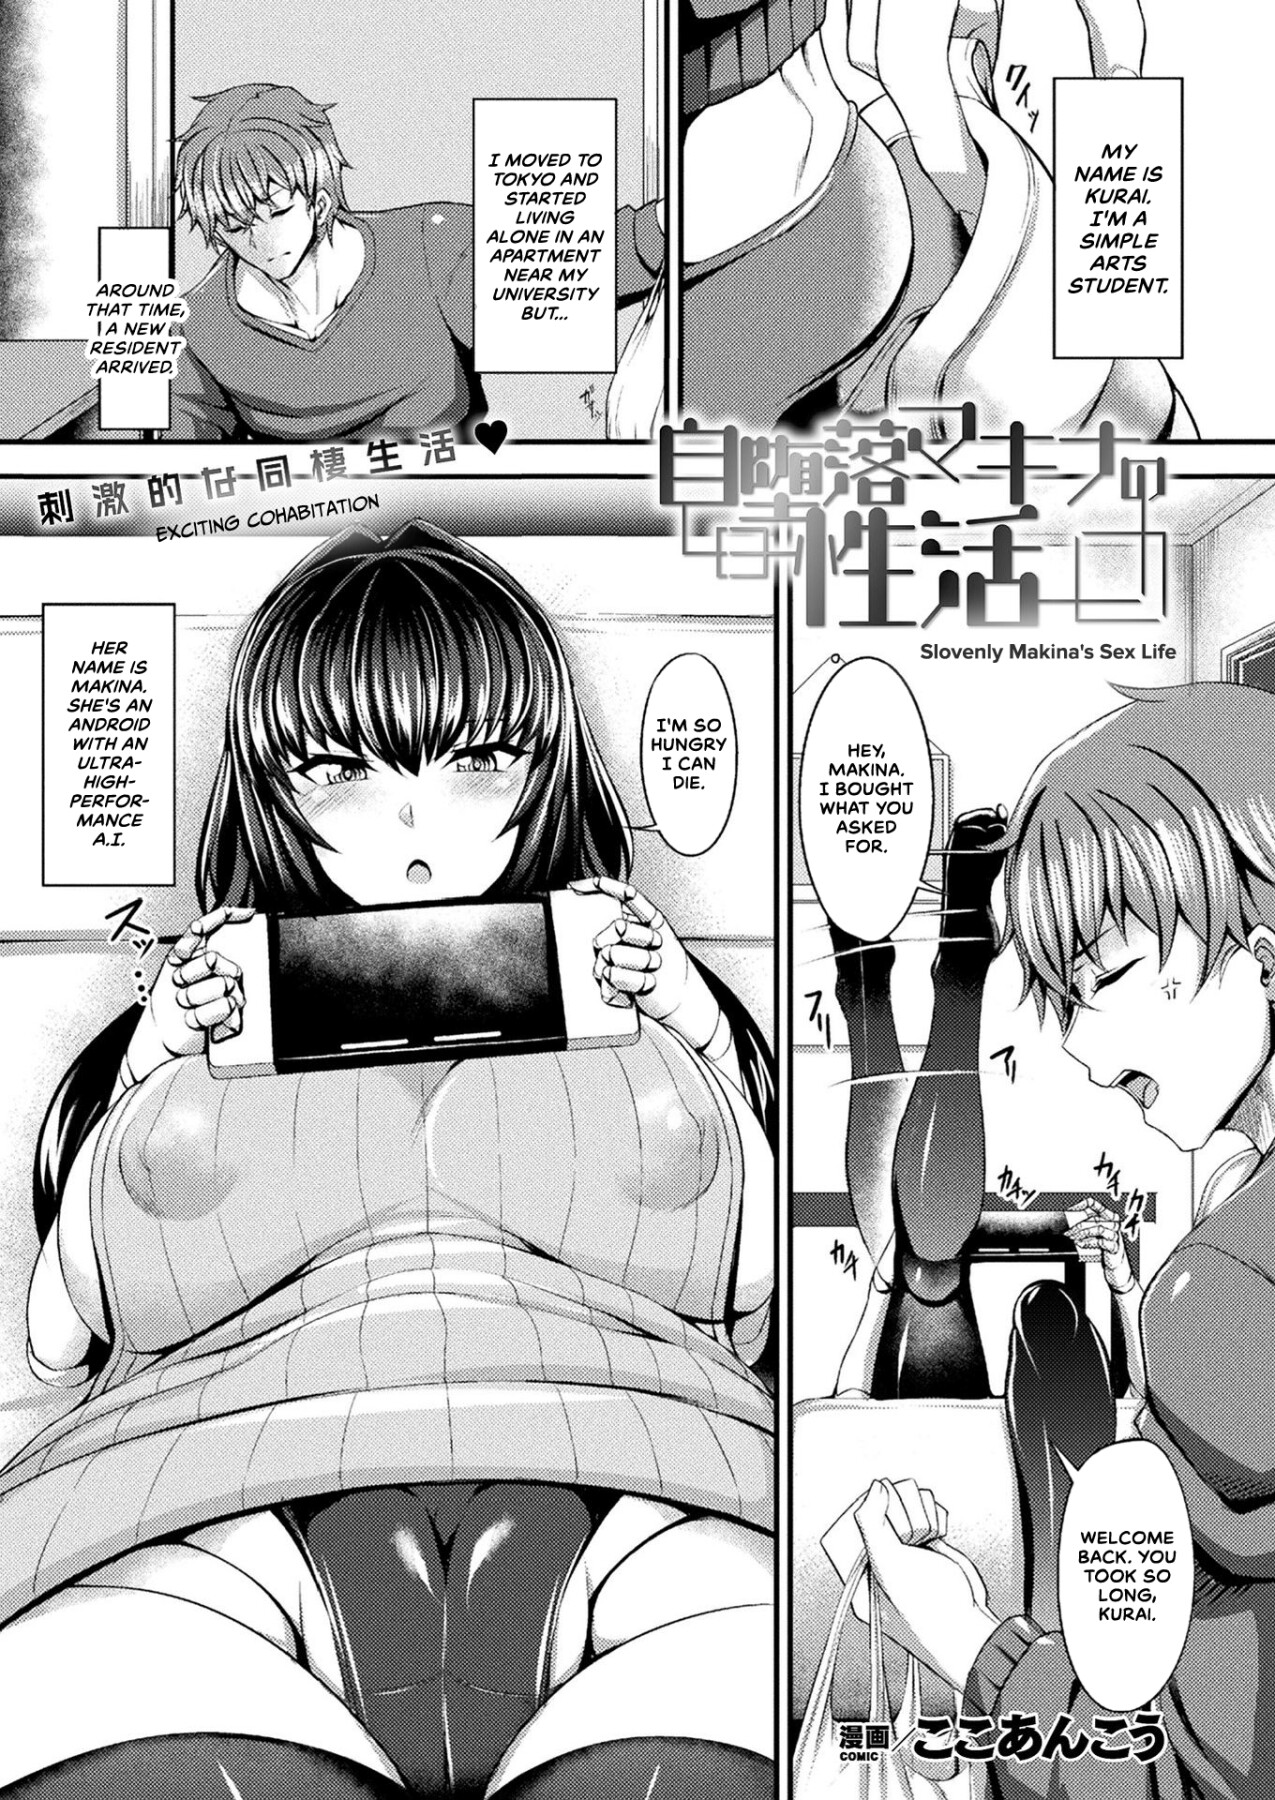 Hentai Manga Comic-Self-Depraved Makina's Sexual Activity-Read-1